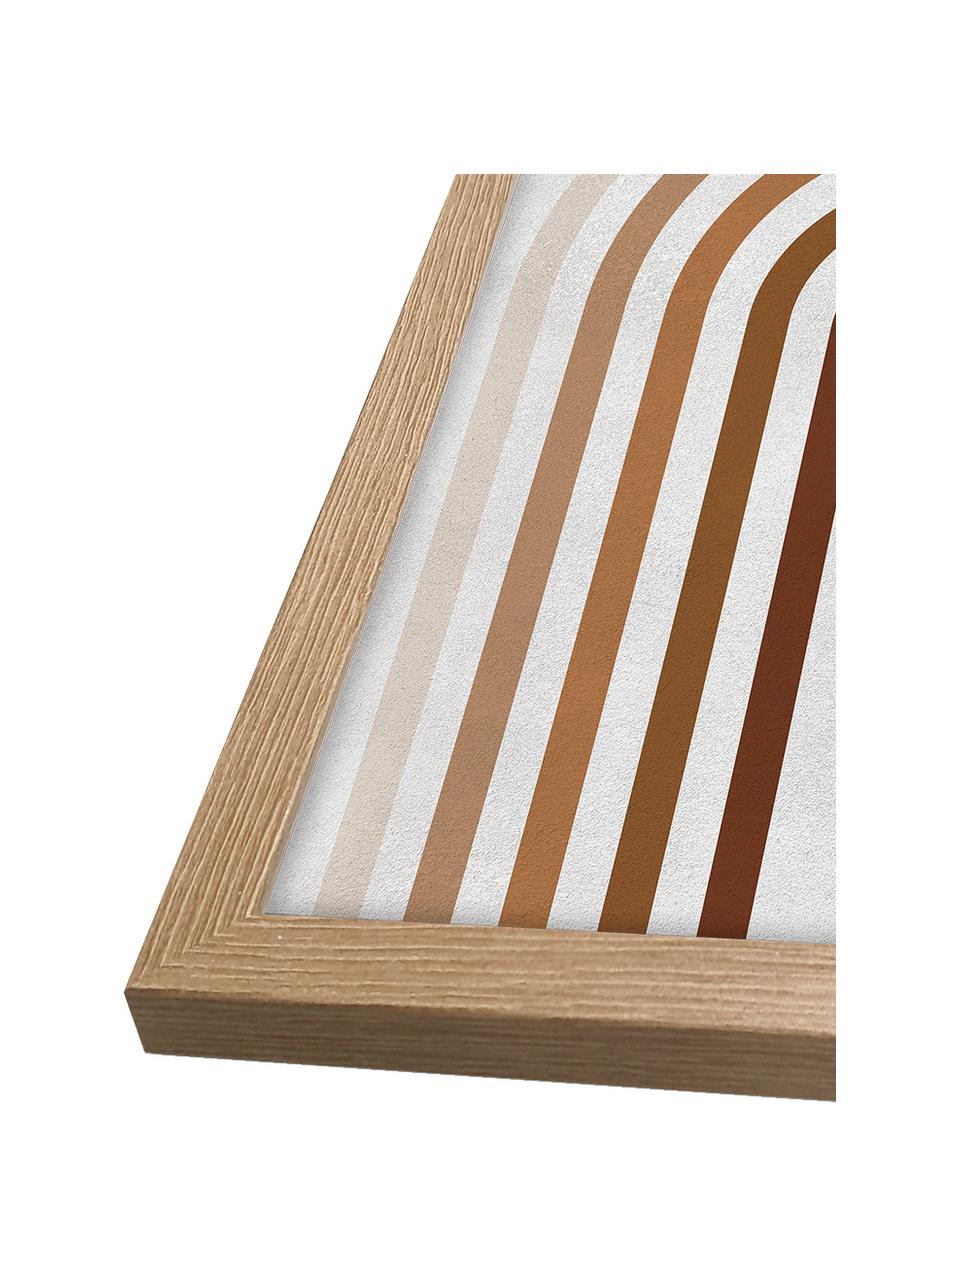 Gerahmter Digitaldruck Upside Curves, Bild: Digitaldruck auf Papier, Rahmen: Holz, Mitteldichte Holzfa, Front: Glas, Upside Curves, B 32 x H 42 cm